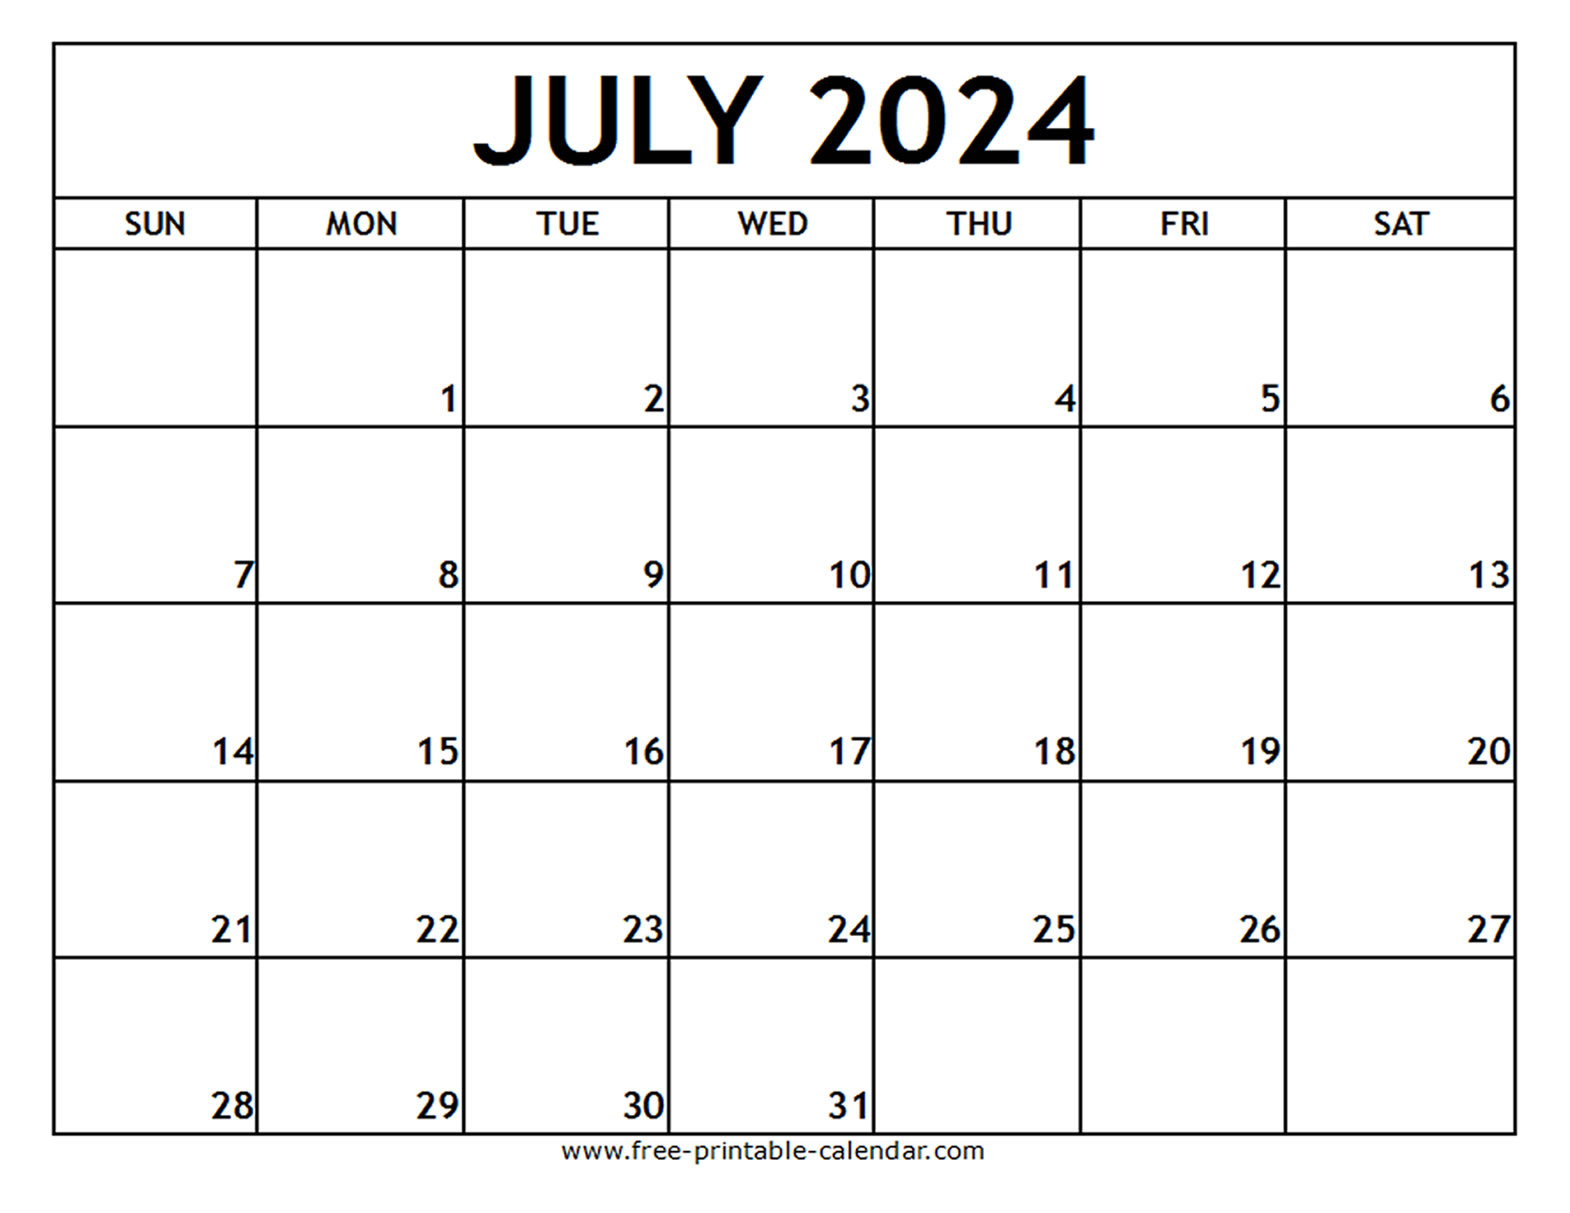 July 2024 Printable Calendar - Free-Printable-Calendar | Printable Monthly Calendar July 2024